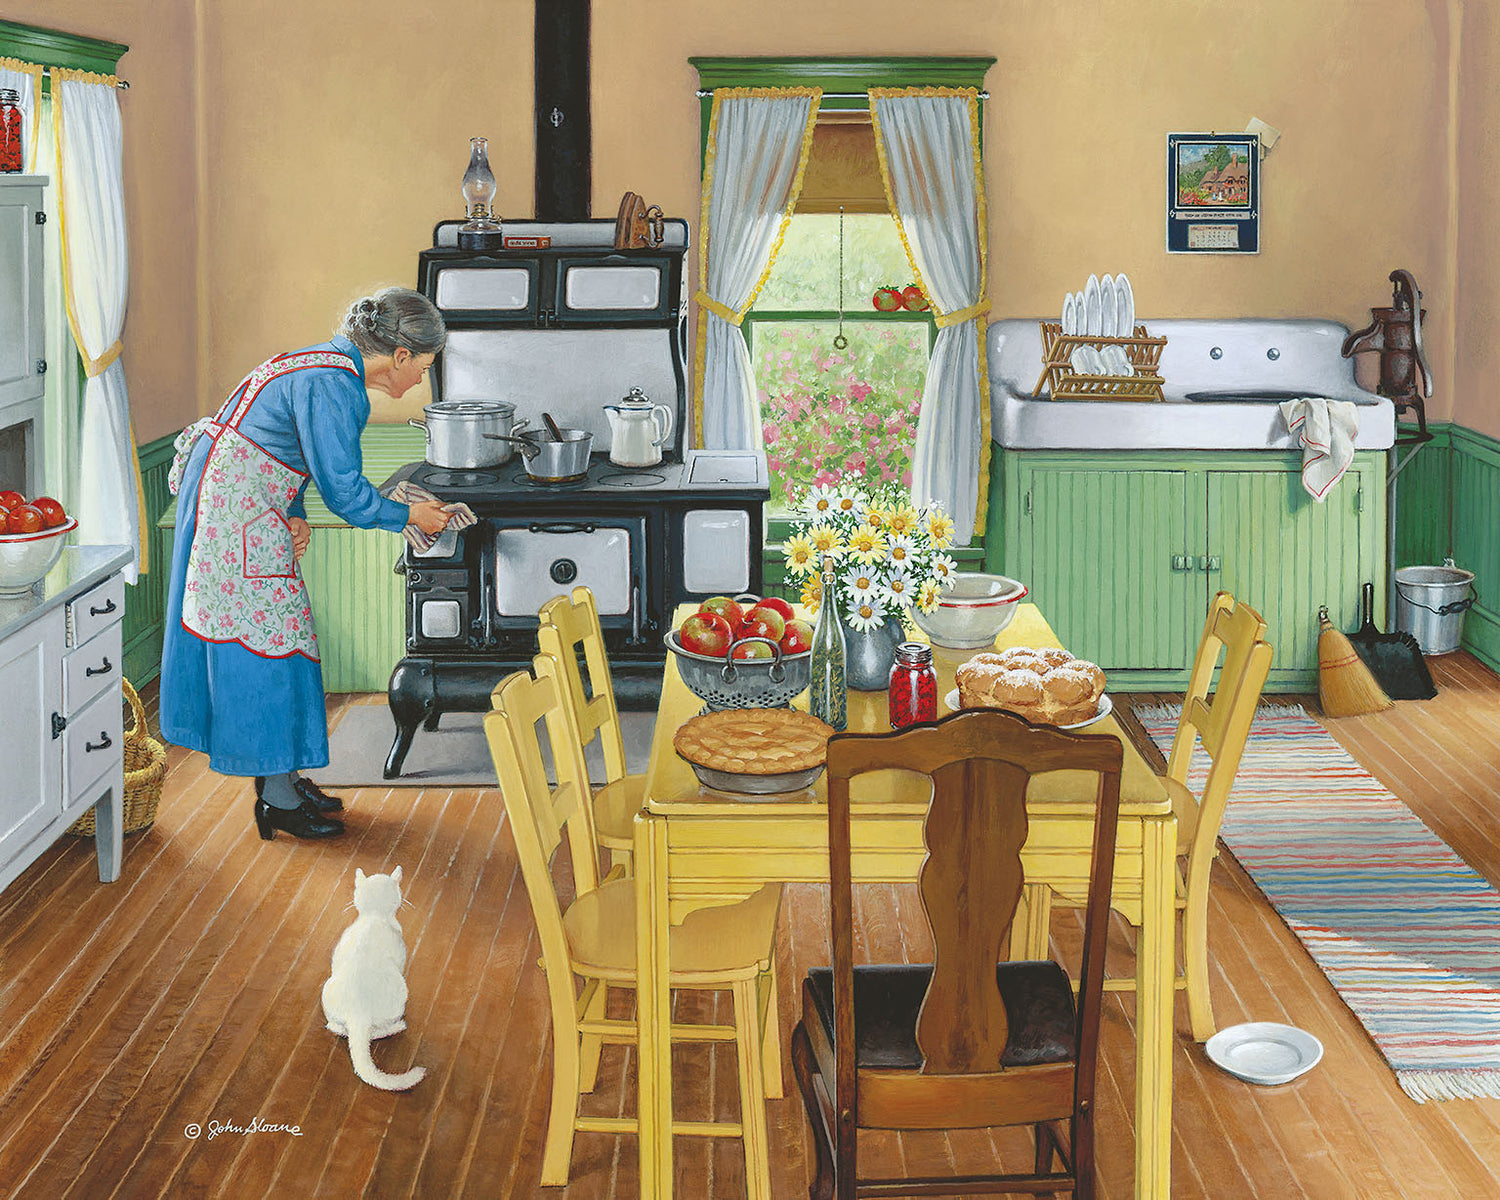 "Grandma's Kitchen" by John Sloane